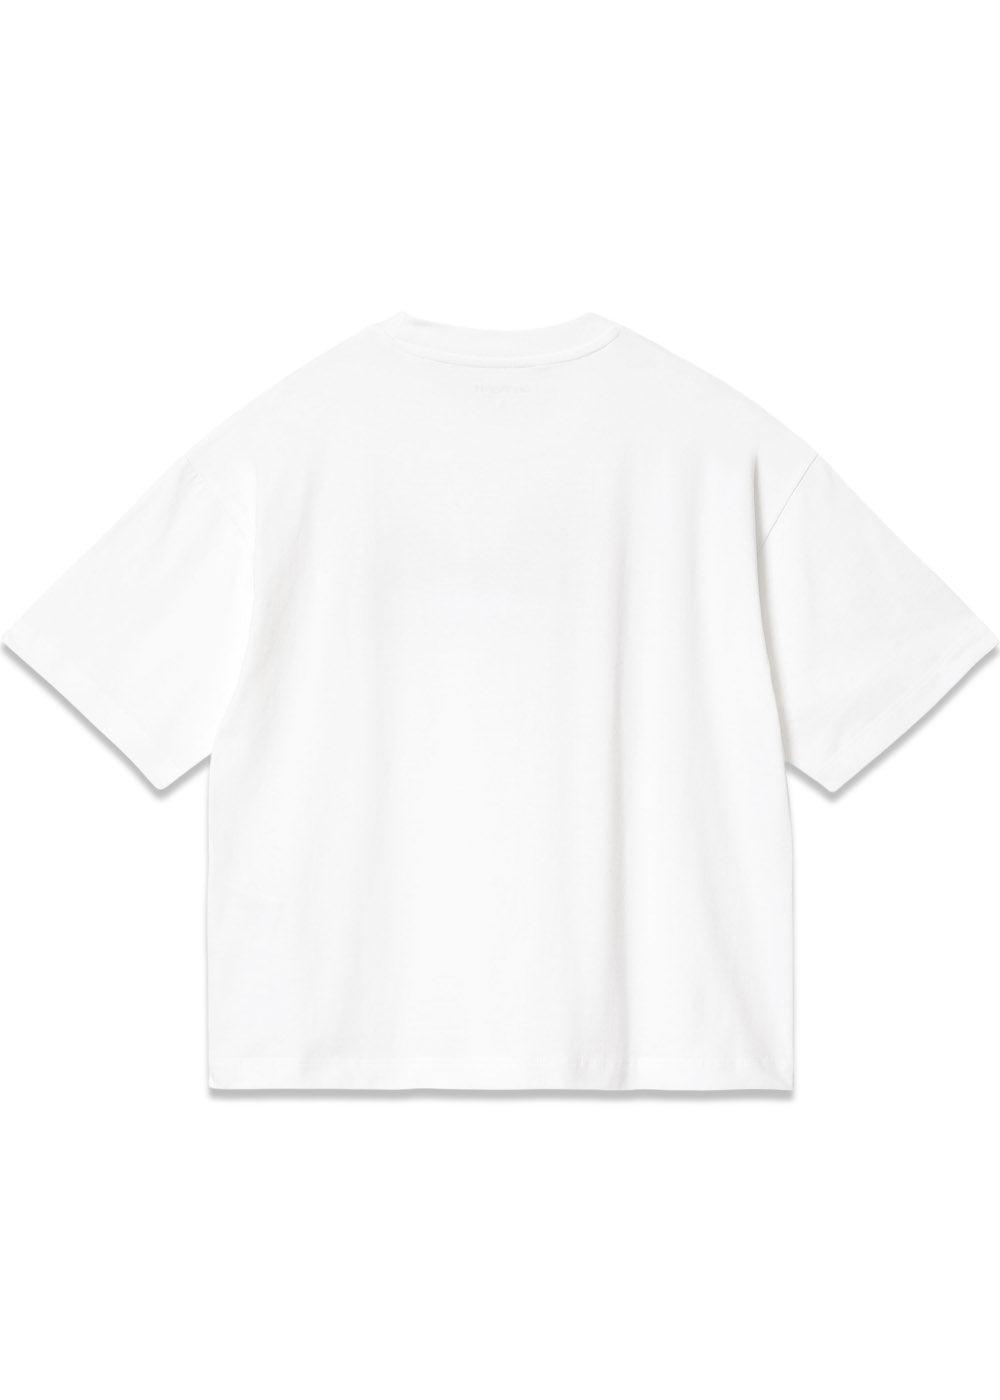 W' S/S Palm Script T-Shirt - White